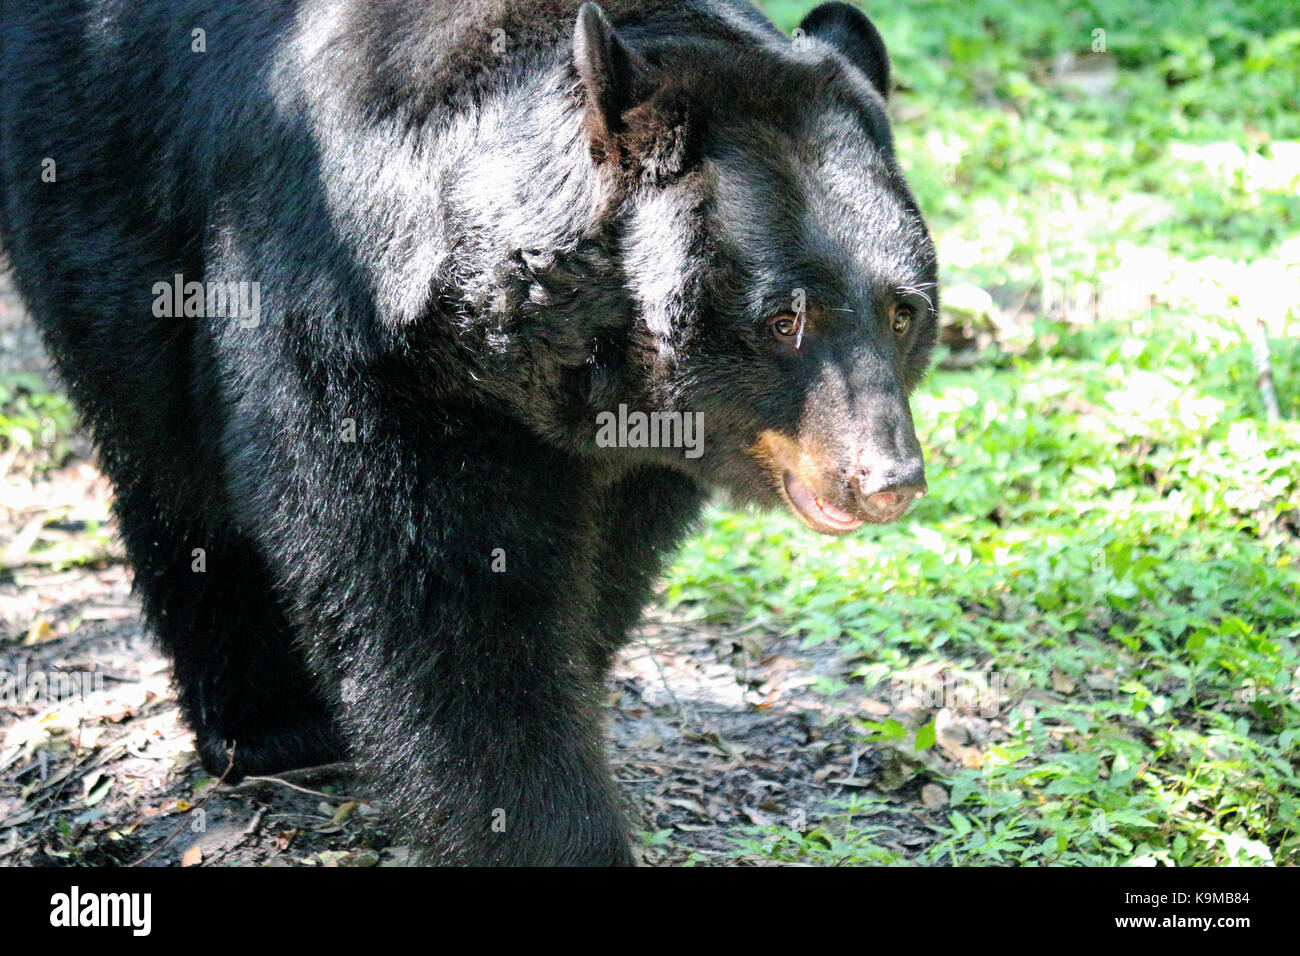 A black bear walking through the grass. Stock Photo